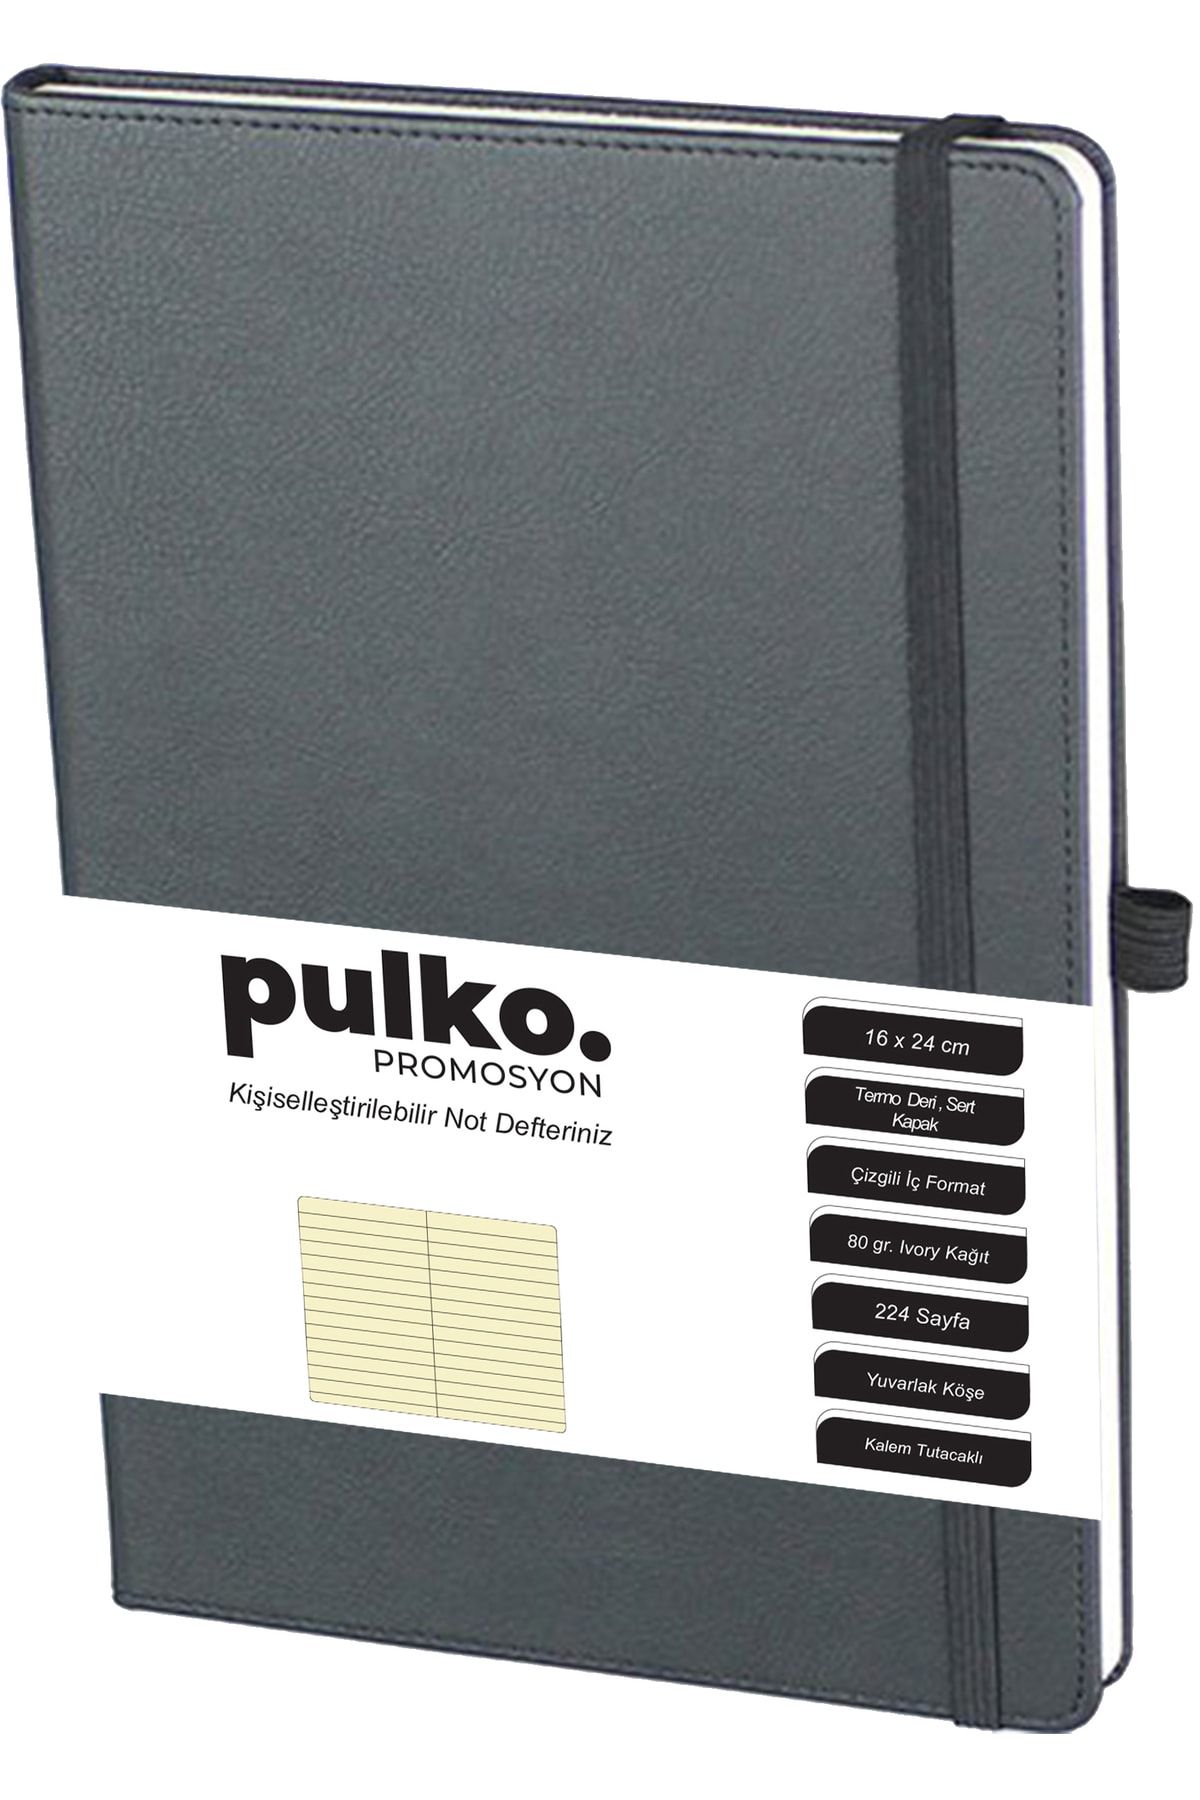 PULKO Promosyon Not Defteri, (16X24CM), Termo Deri, 224 Sayfa, Çizgili, 041, Siyah